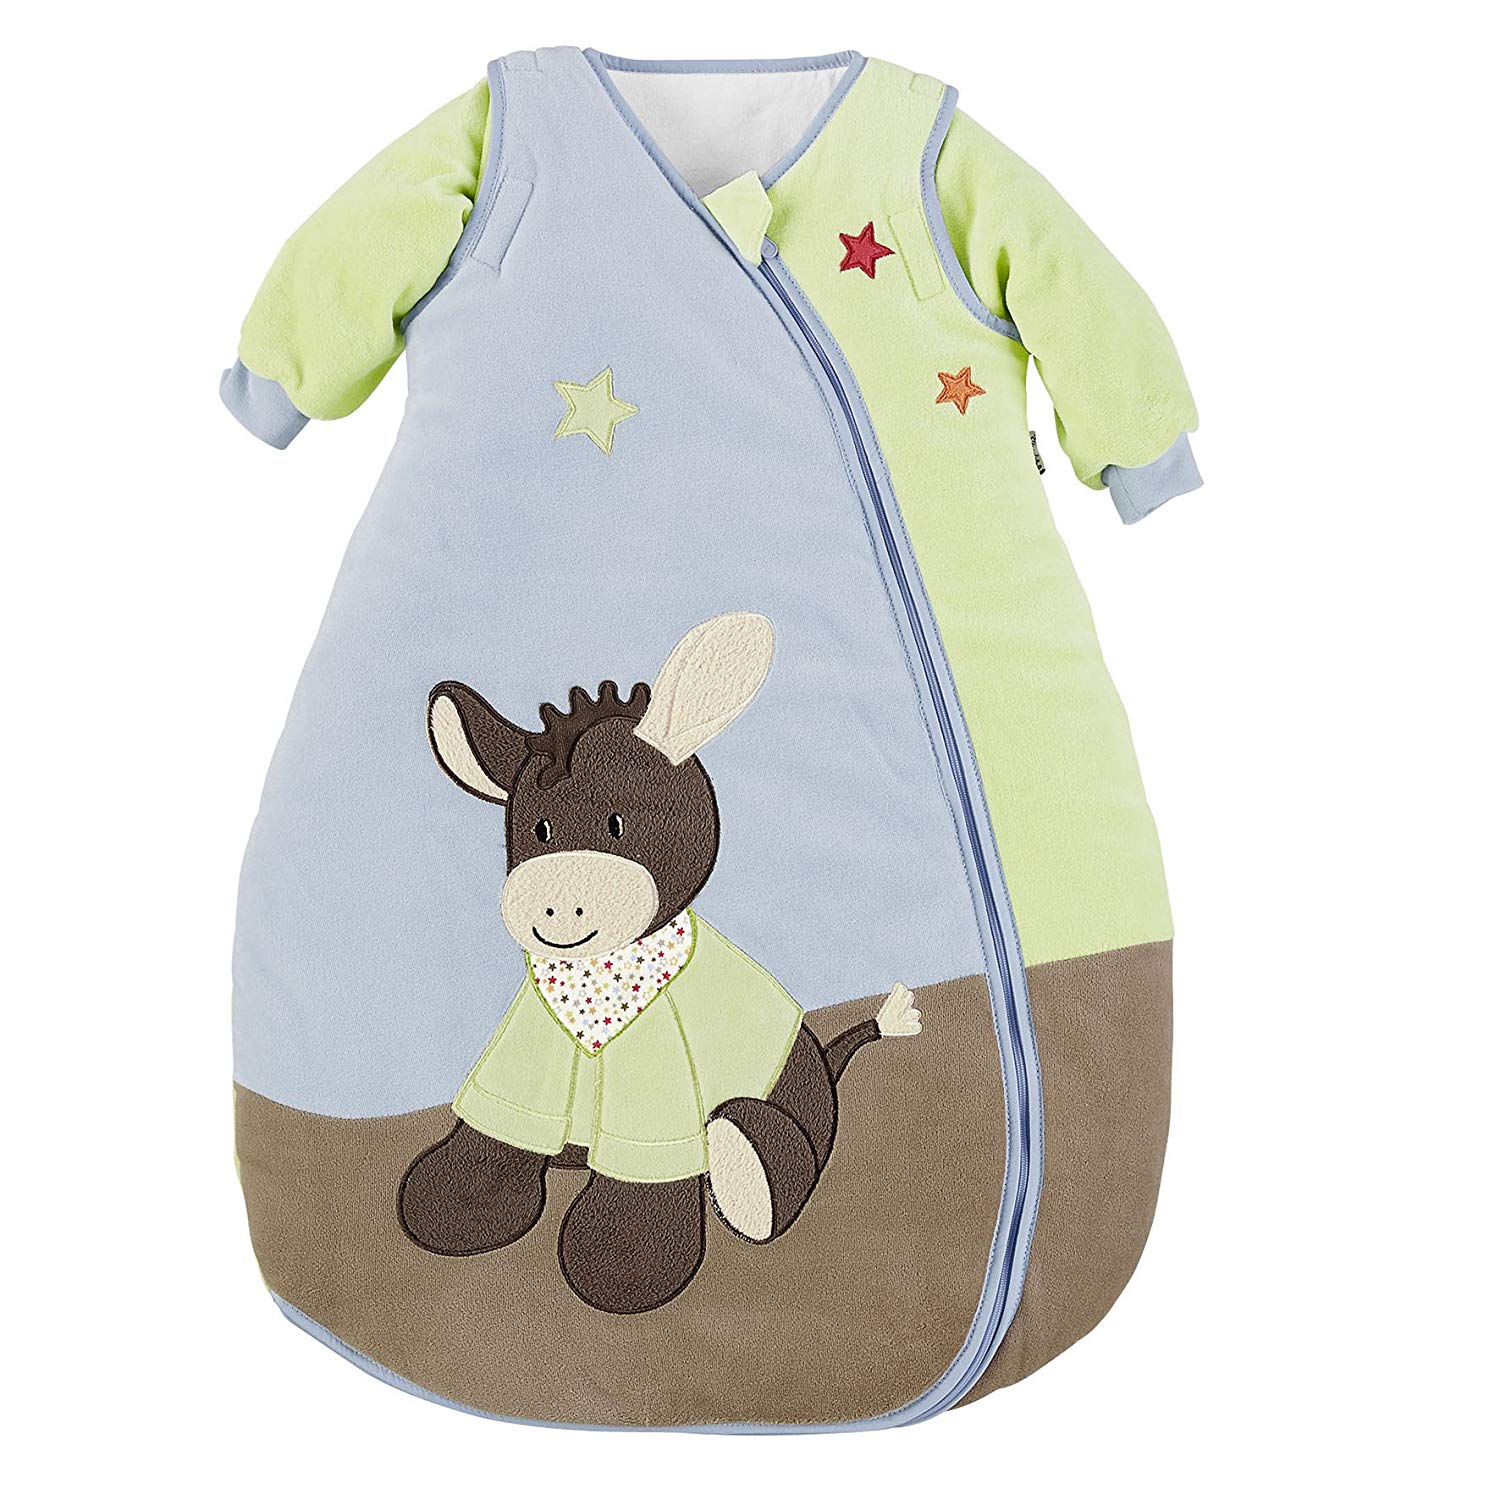 Sterntaler Sleeping Bag Emmi Donkey with Removable Sleeves